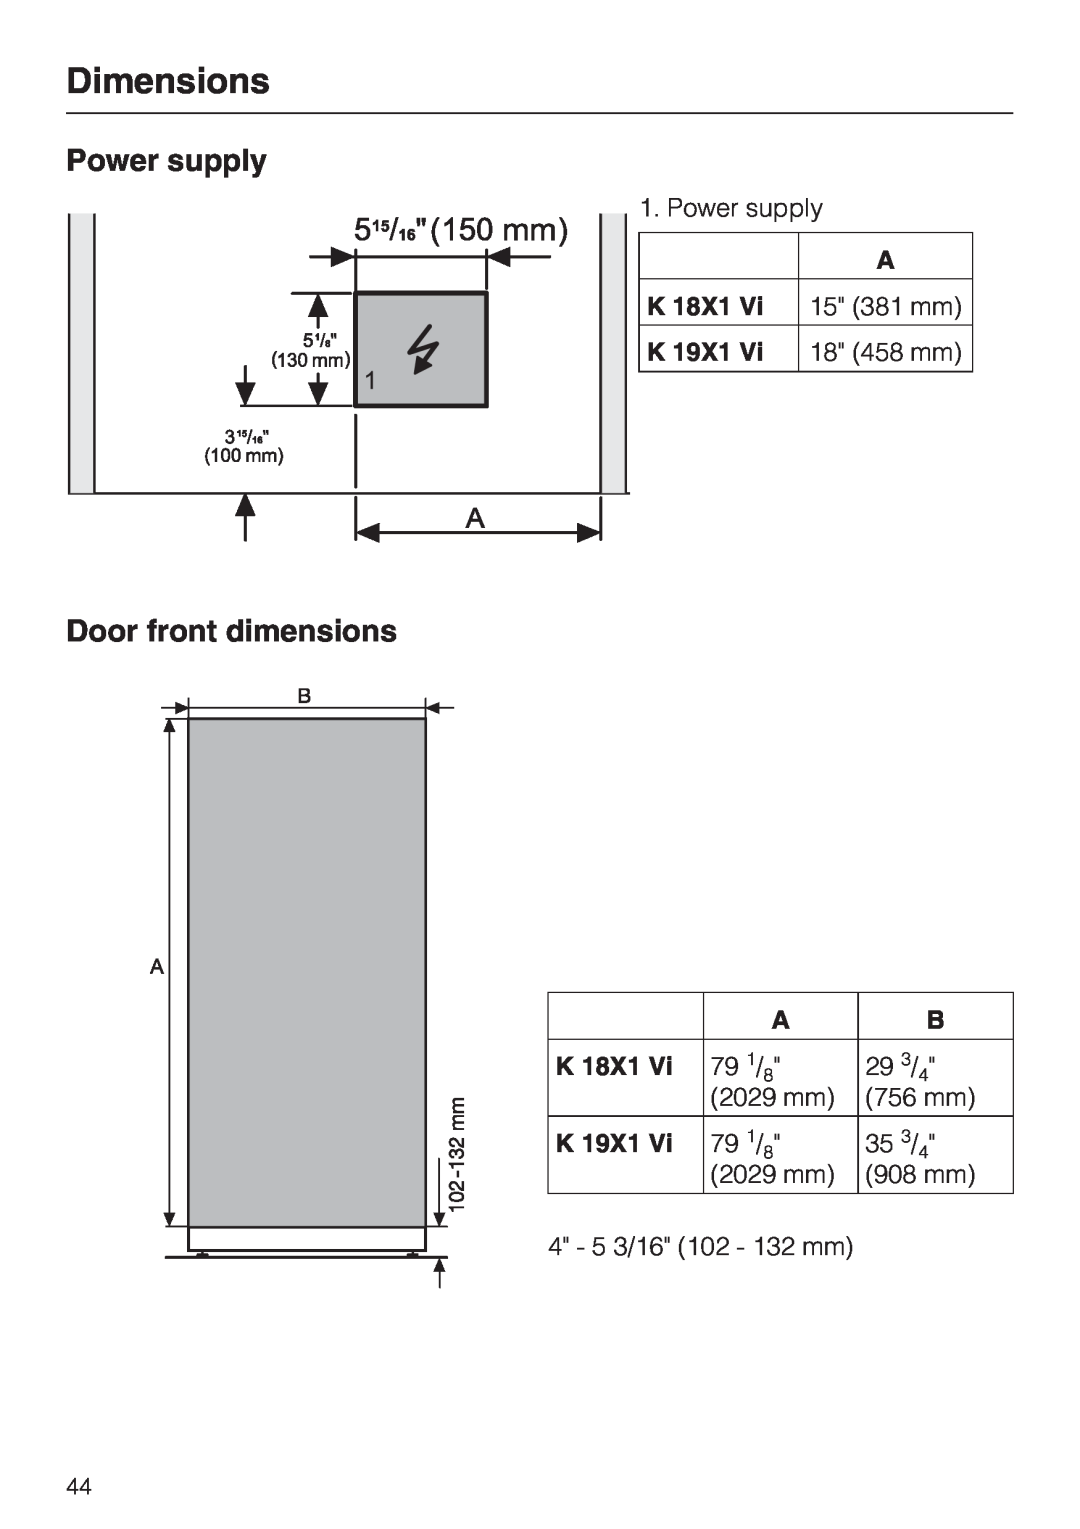 Miele K 1911 Vi, K 1901 Vi, K 1801 Vi, K 1811 Vi Power supply Door front dimensions, Dimensions, 15 381 mm, 18 458 mm 